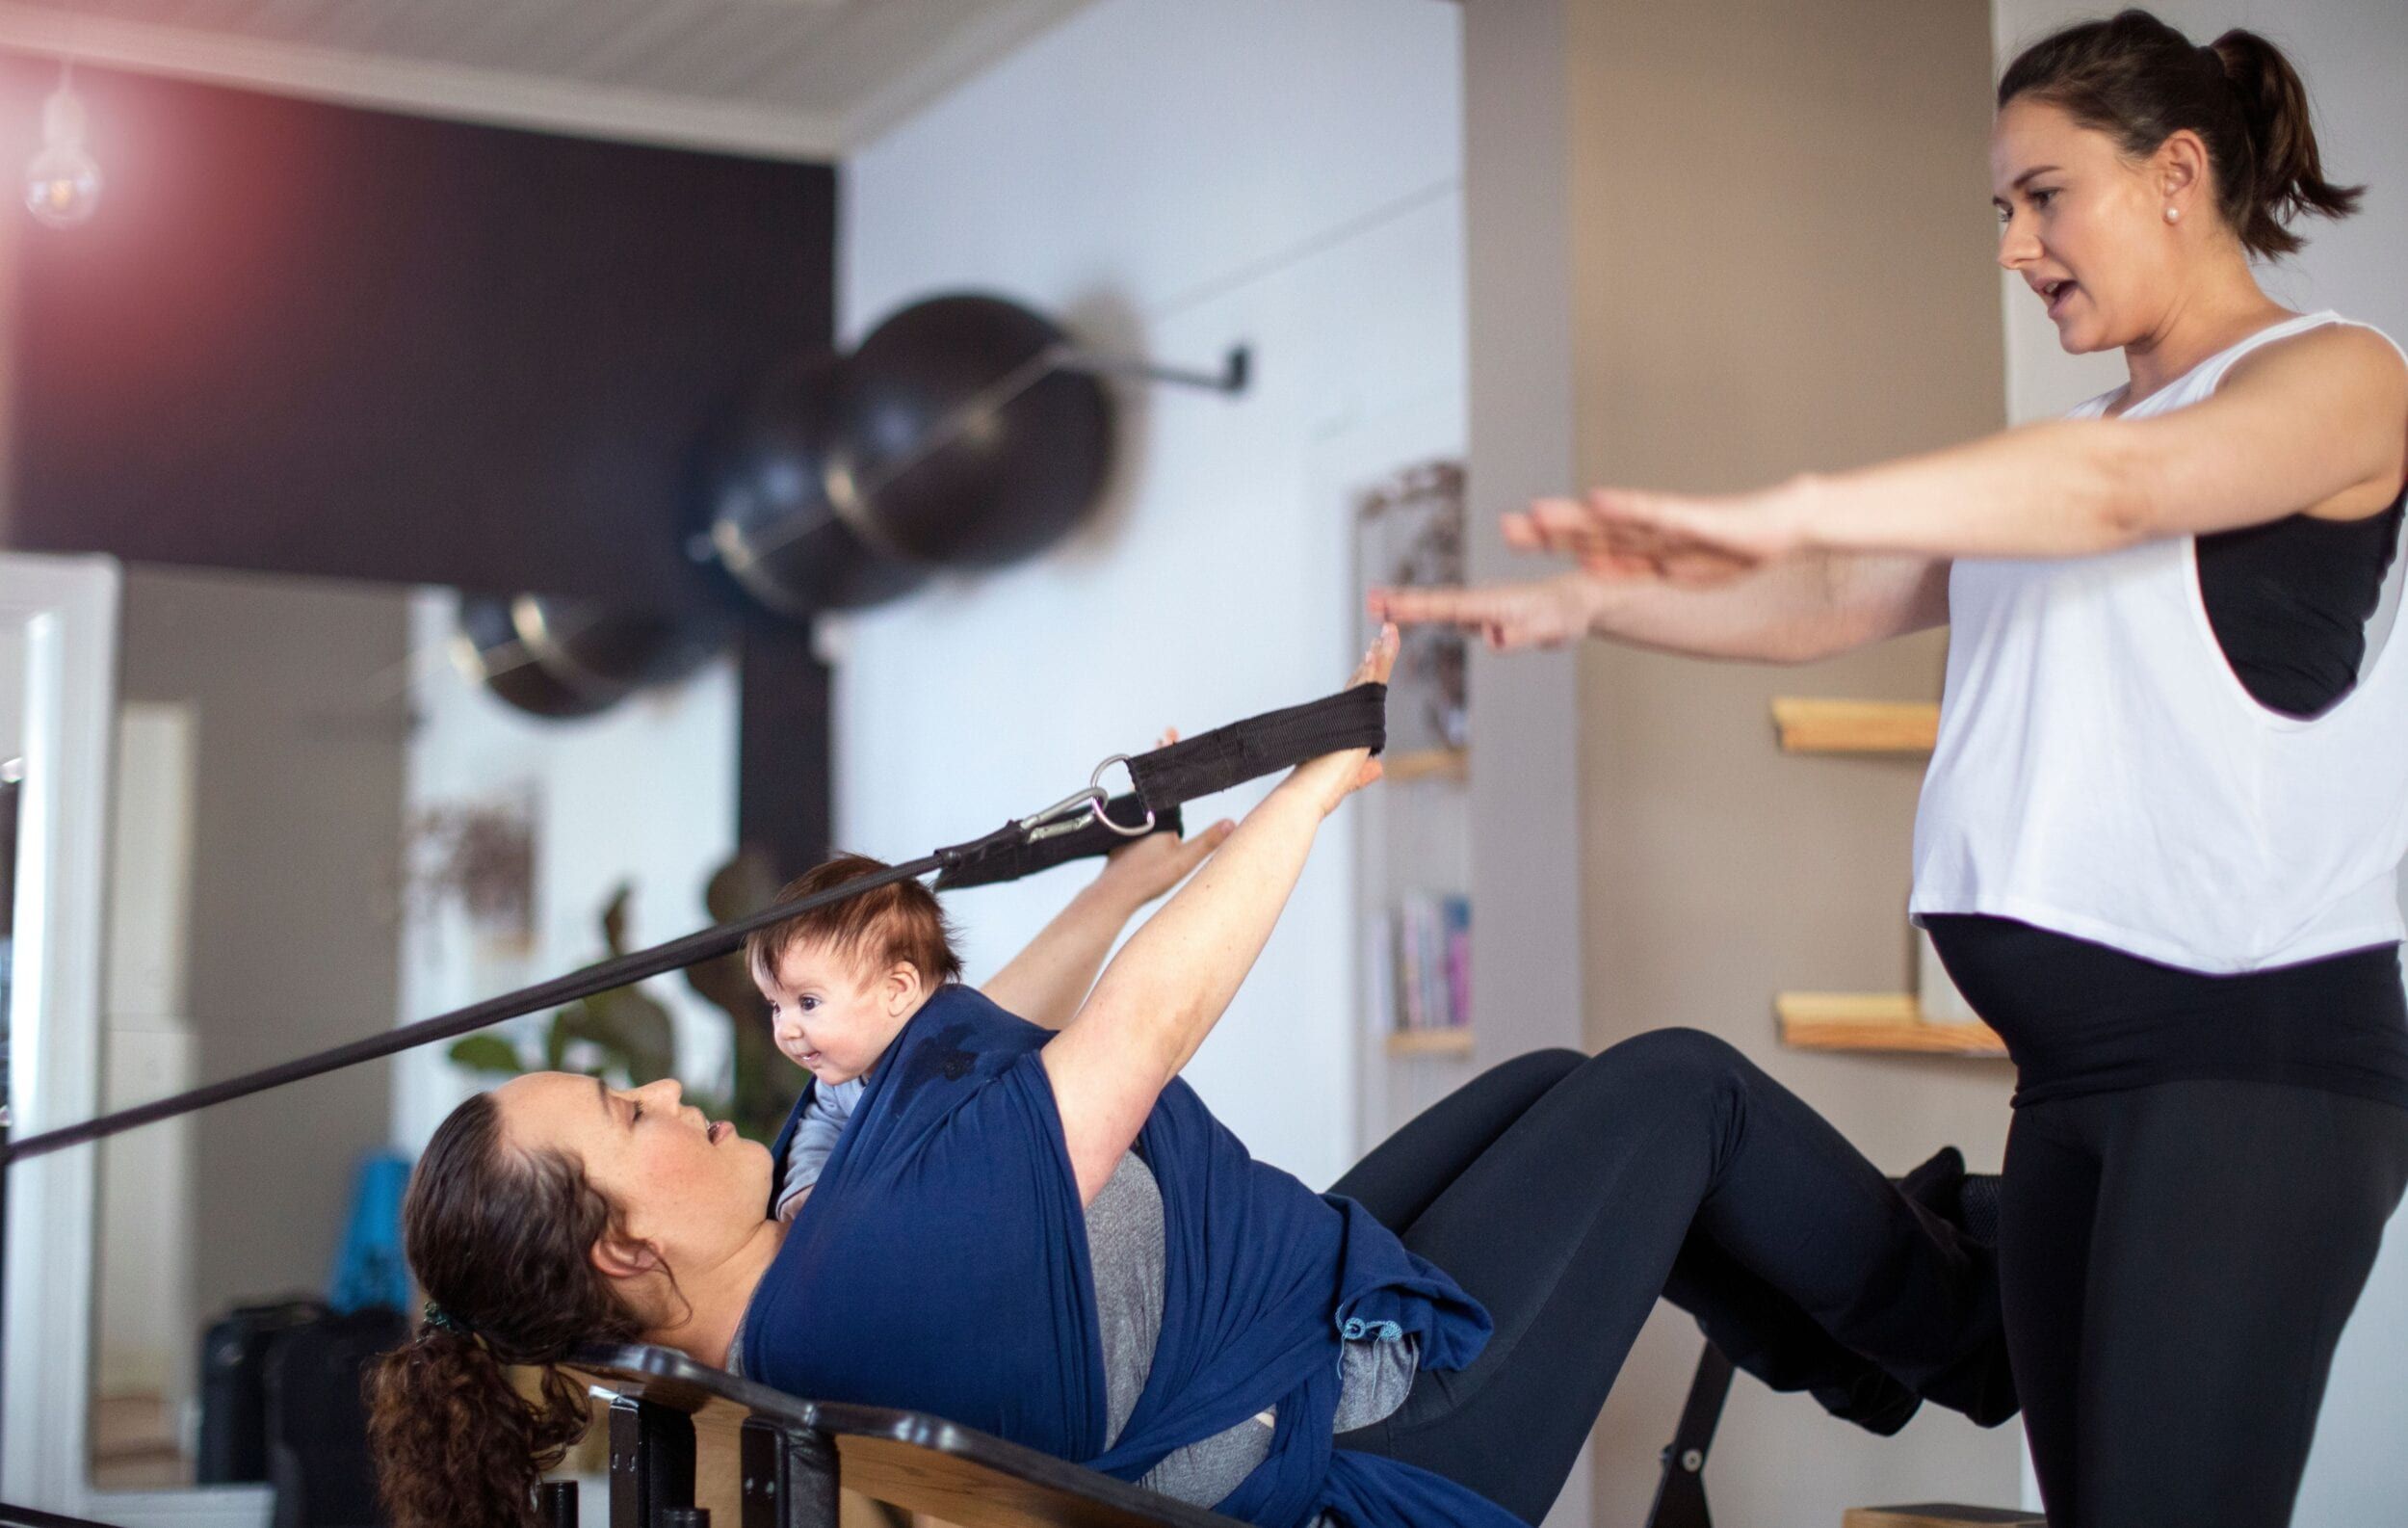 https://b889ef59.flyingcdn.com/wp-content/uploads/2021/06/female-pilates-instructor-studio-mom-exercising-scaled.jpg